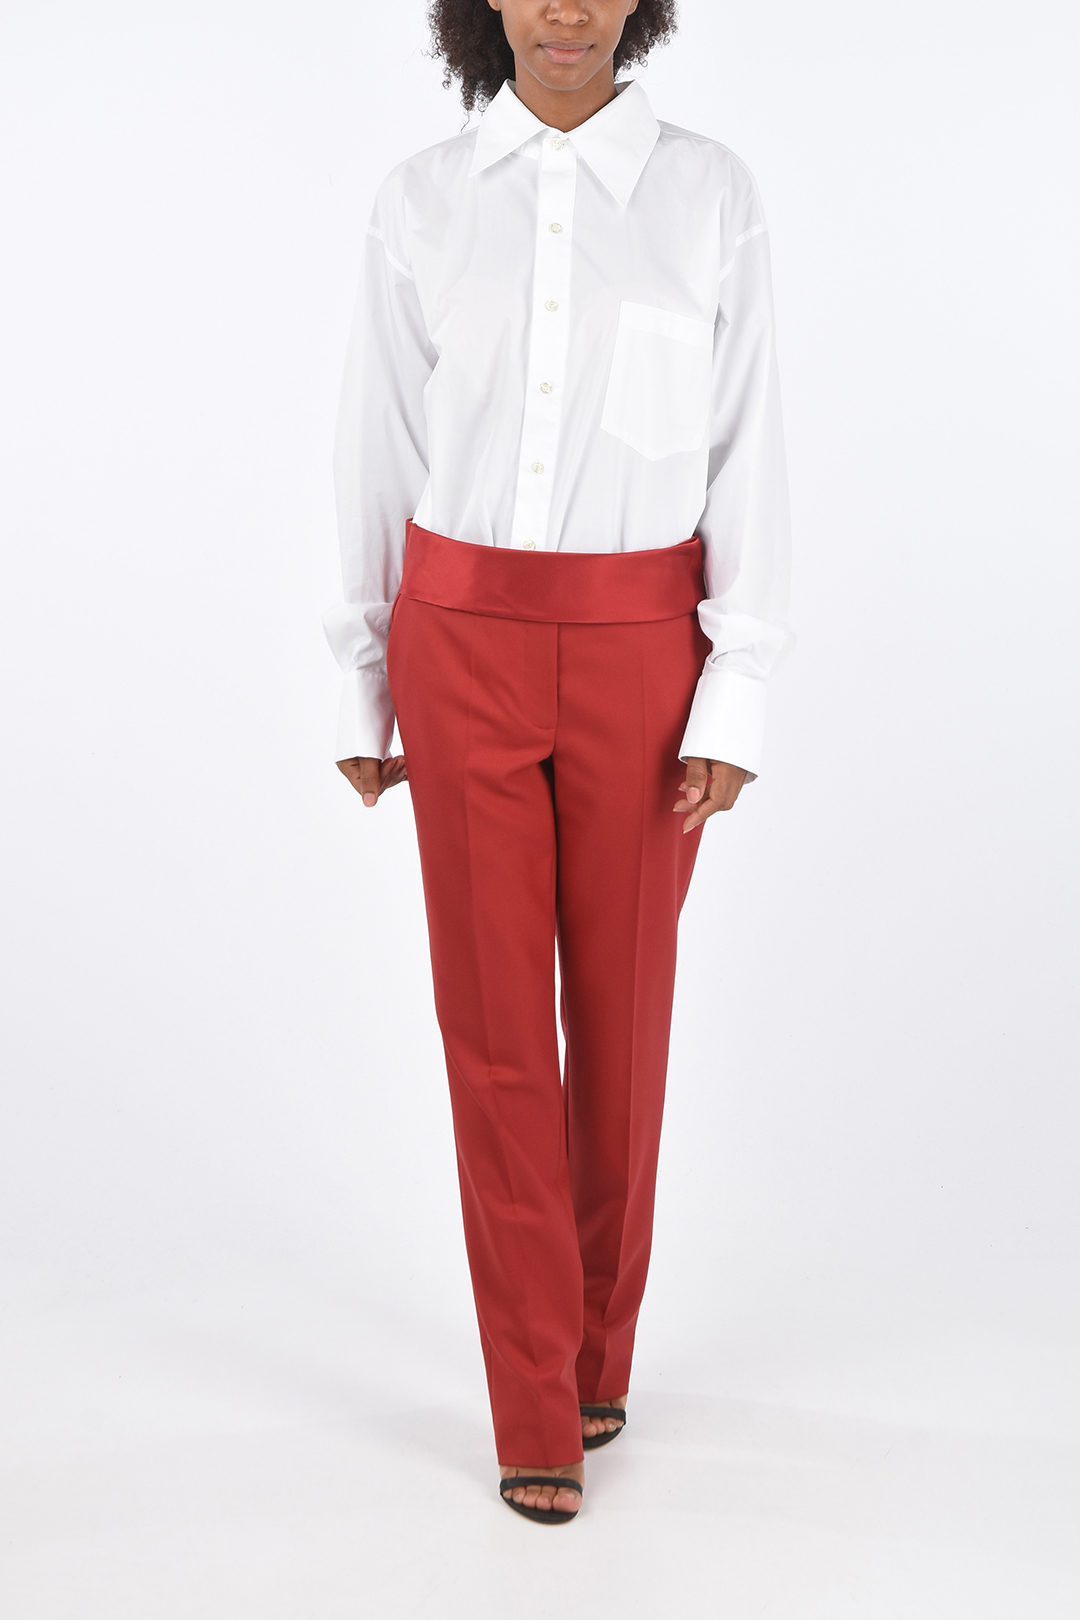 ASOS DESIGN Plus super skinny tuxedo pants in red  ASOS